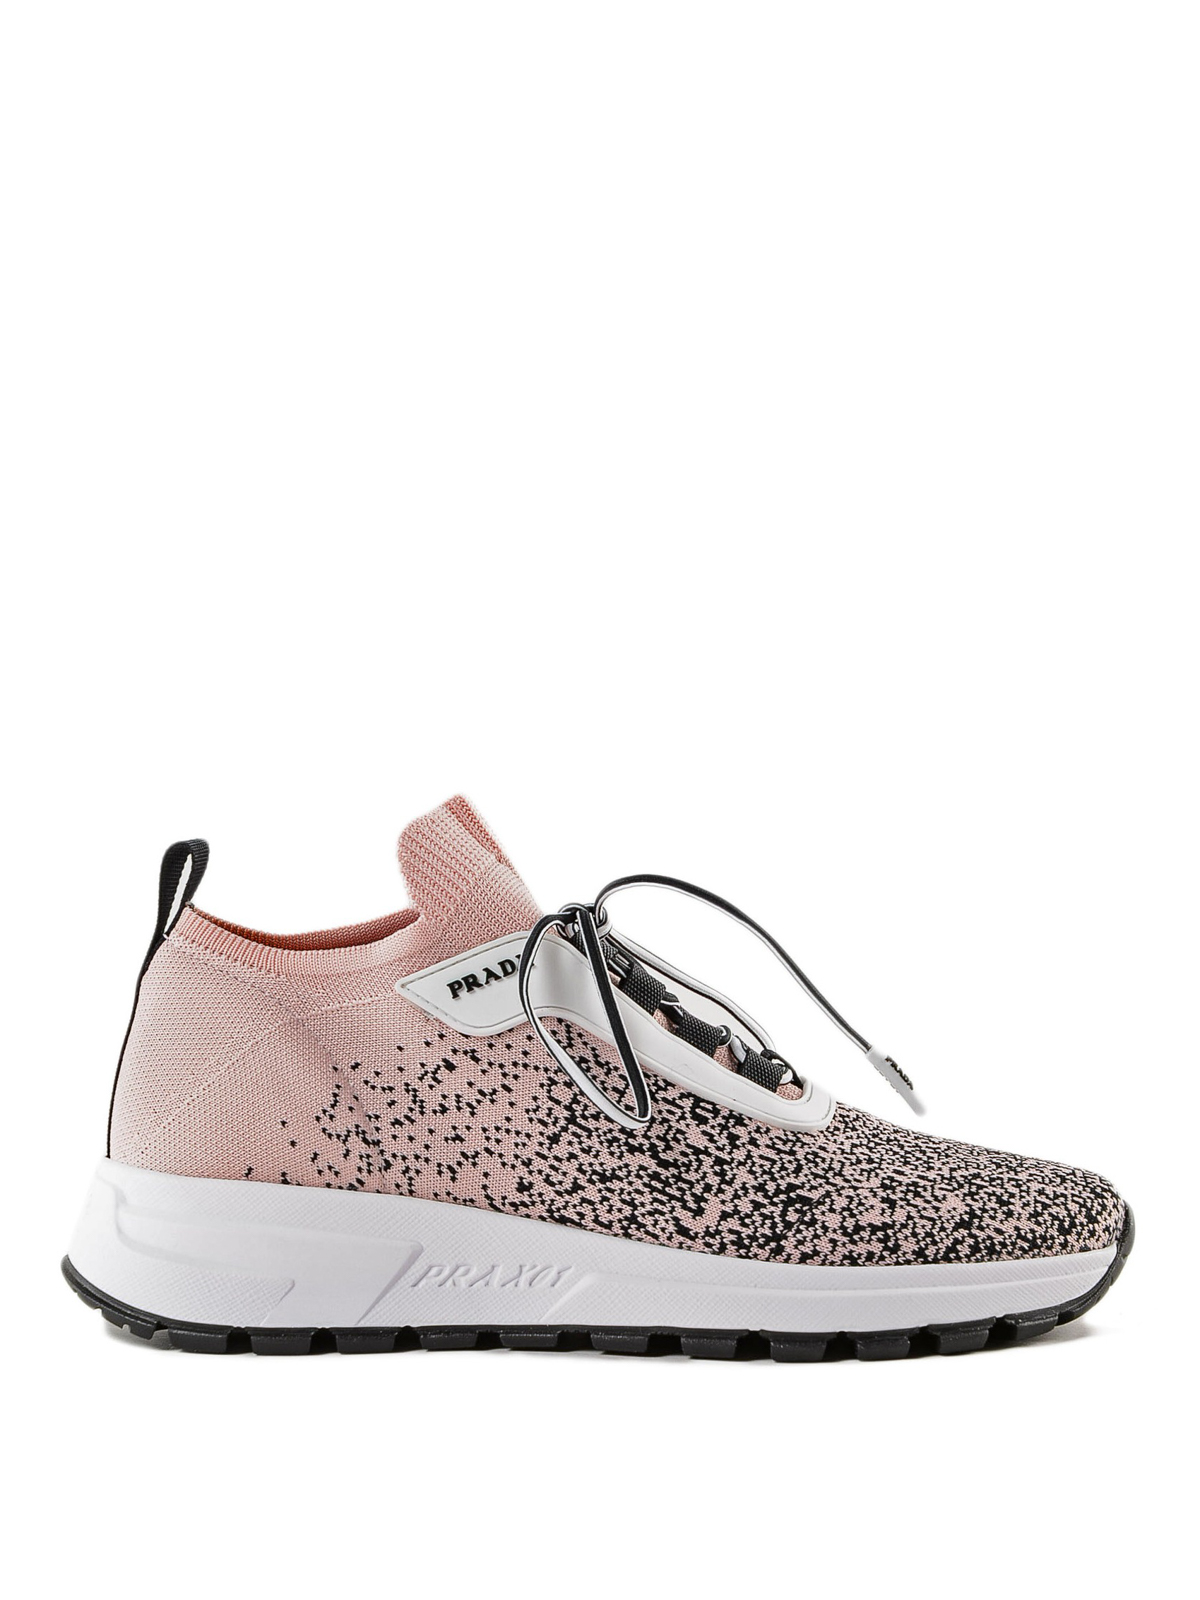 Prada - Pink shaded intarsia fabric sneakers - trainers - 1E246L3KSQ54Z